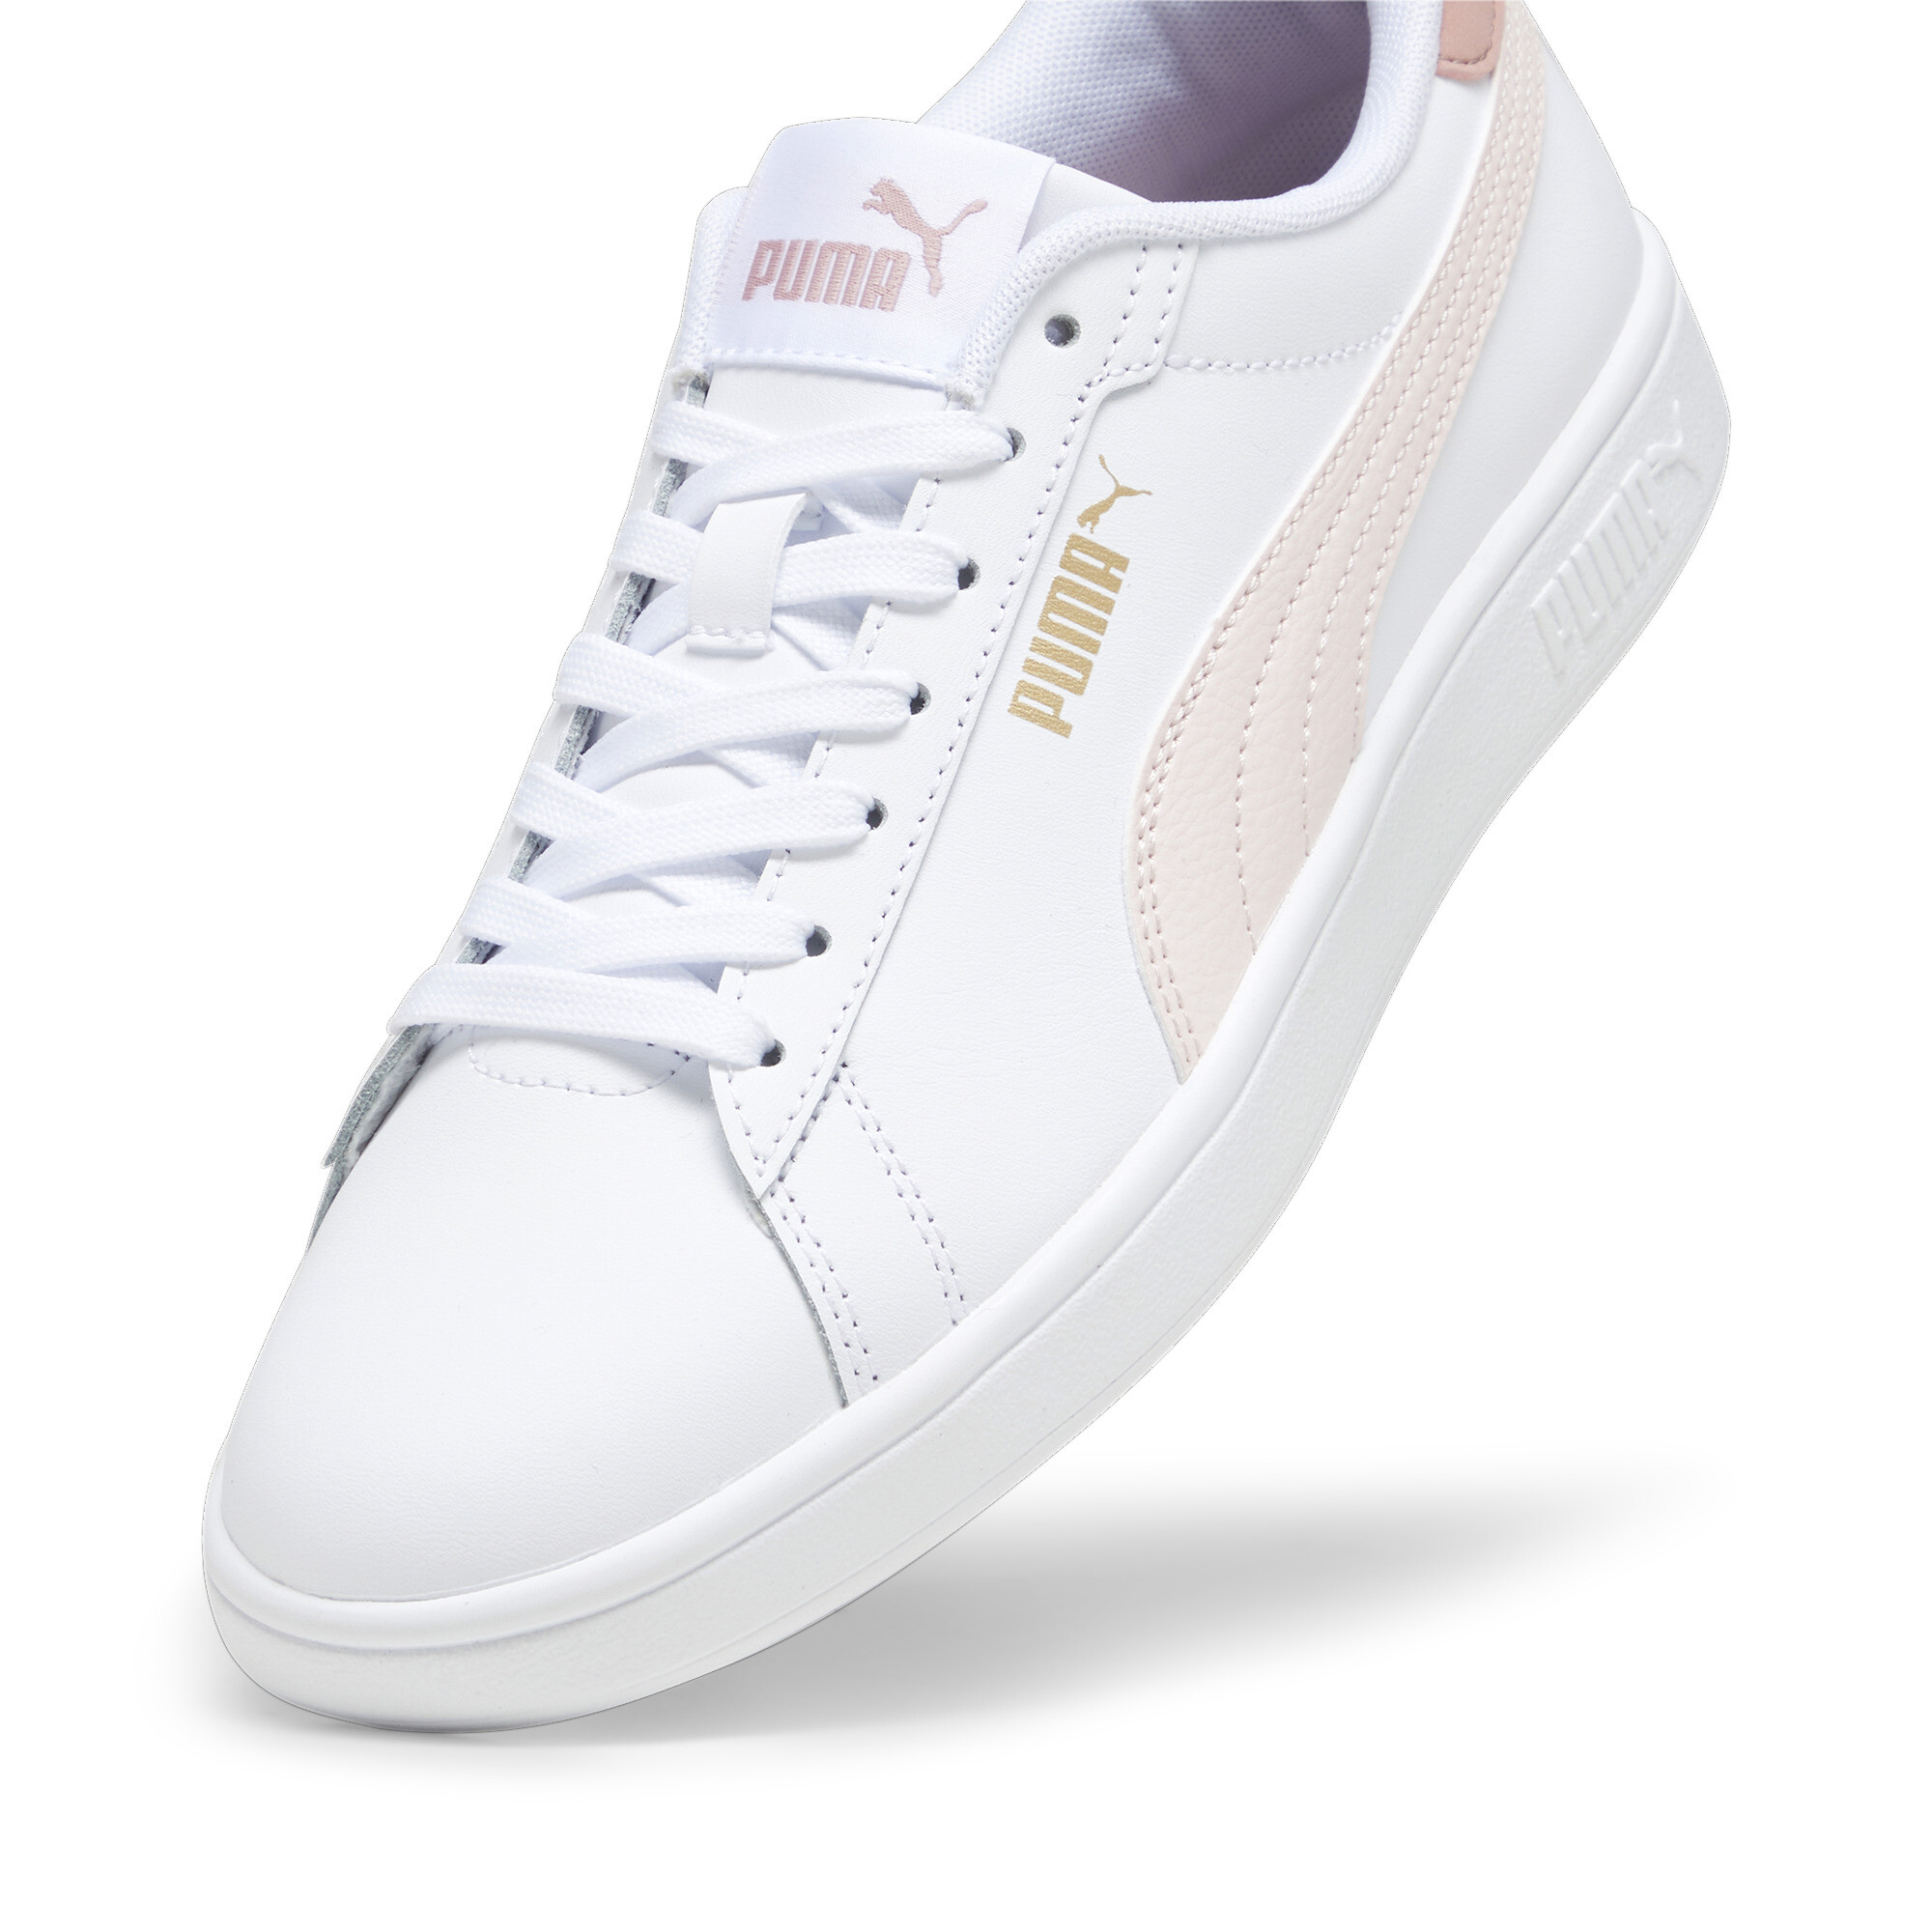 Puma Smash 3.0 L Sneakers, White, Size 37, Shoes